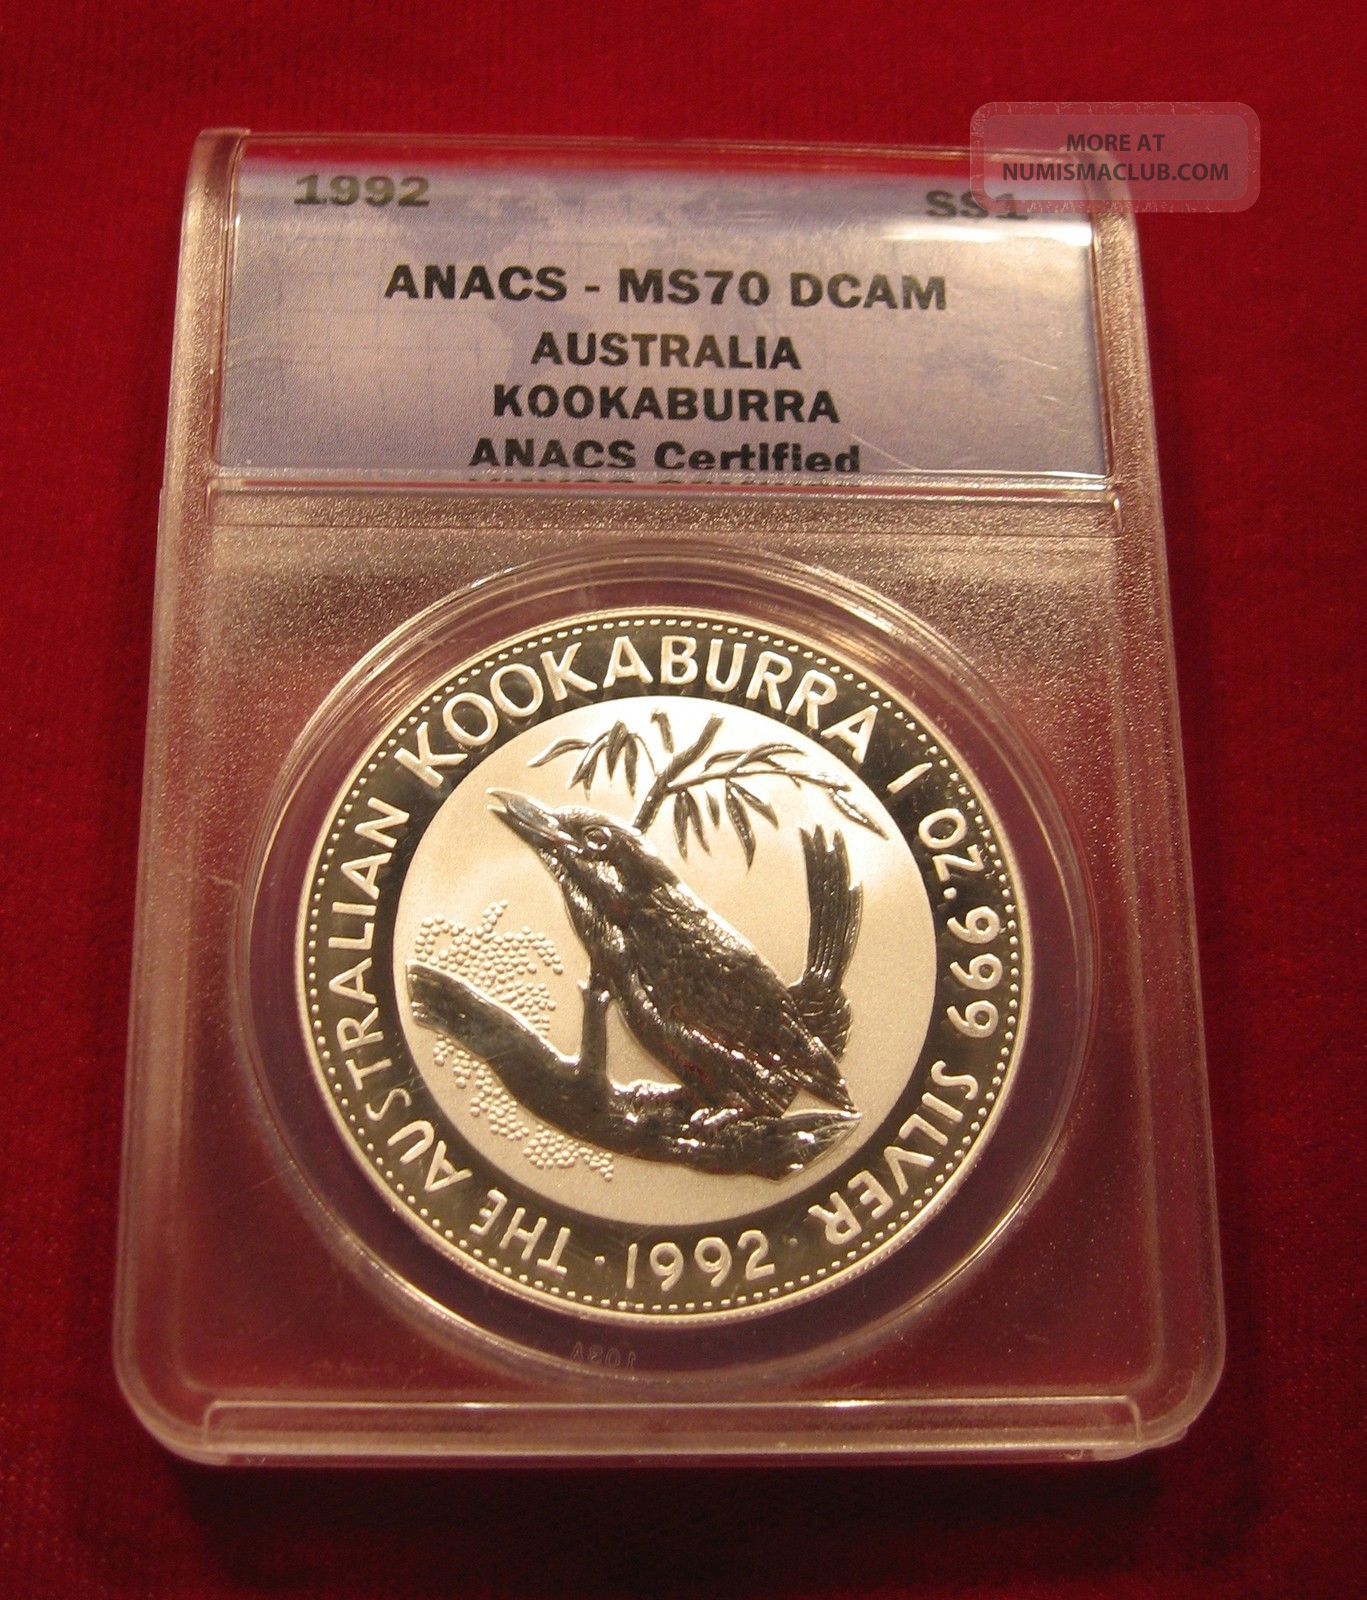 1992 Australia 1 Oz Silver $1 Kookaburra Anacs Ms70 Dcam Coin